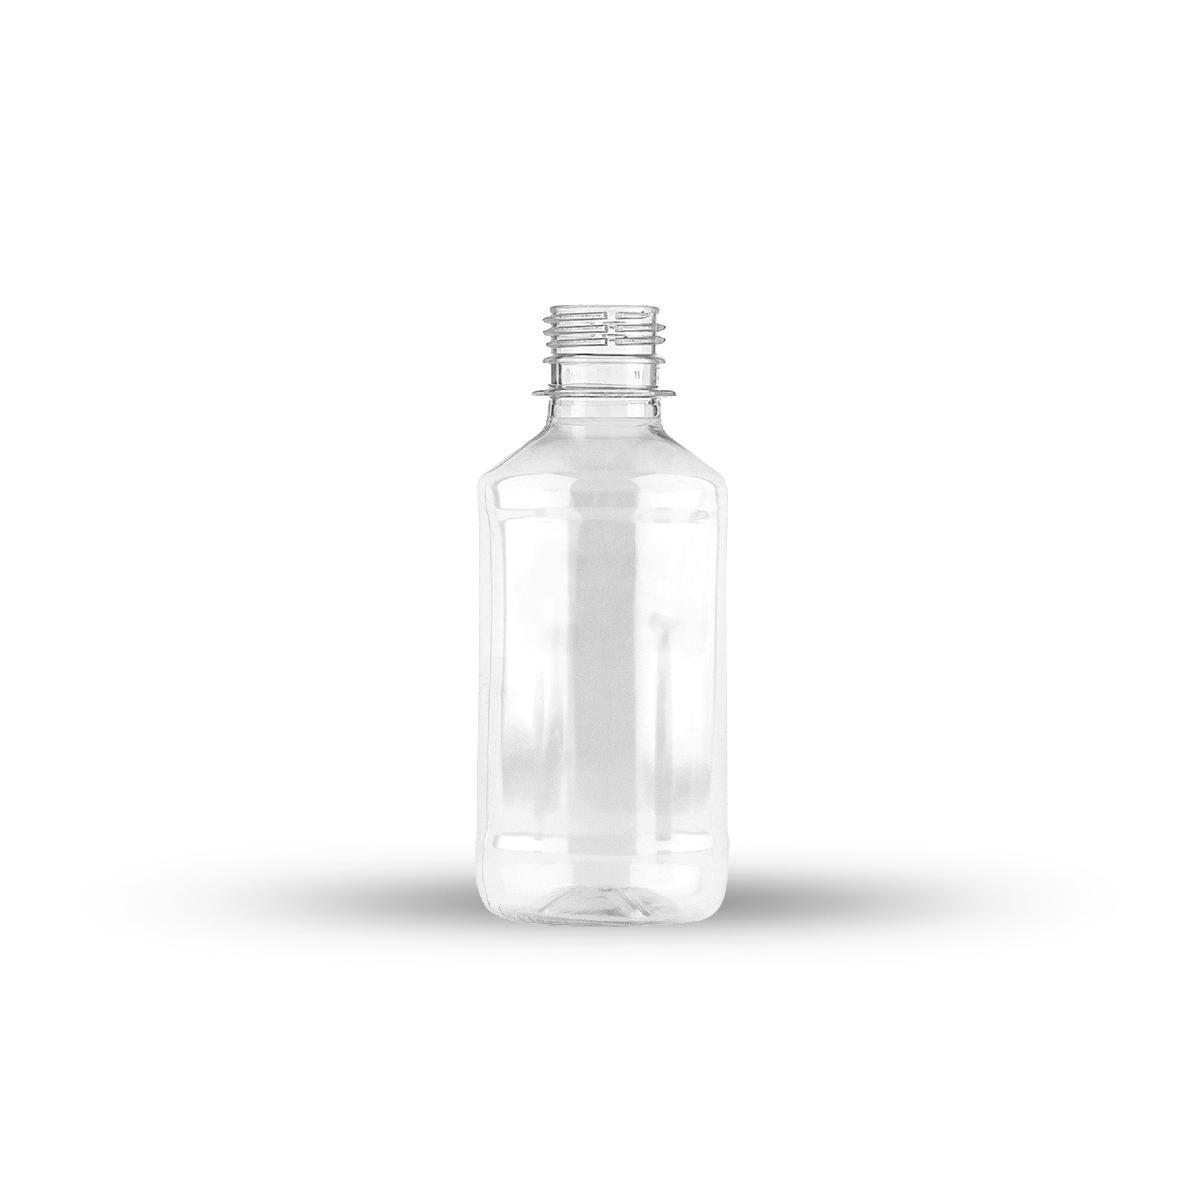 Бутылка ПЭТ 0,25л прозрачная 28мм БЕЗ крышки высокое горло (190)